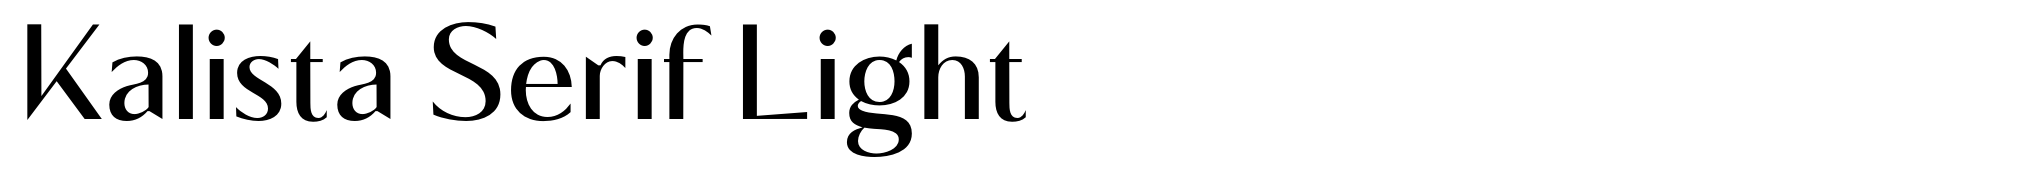 Kalista Serif Light image